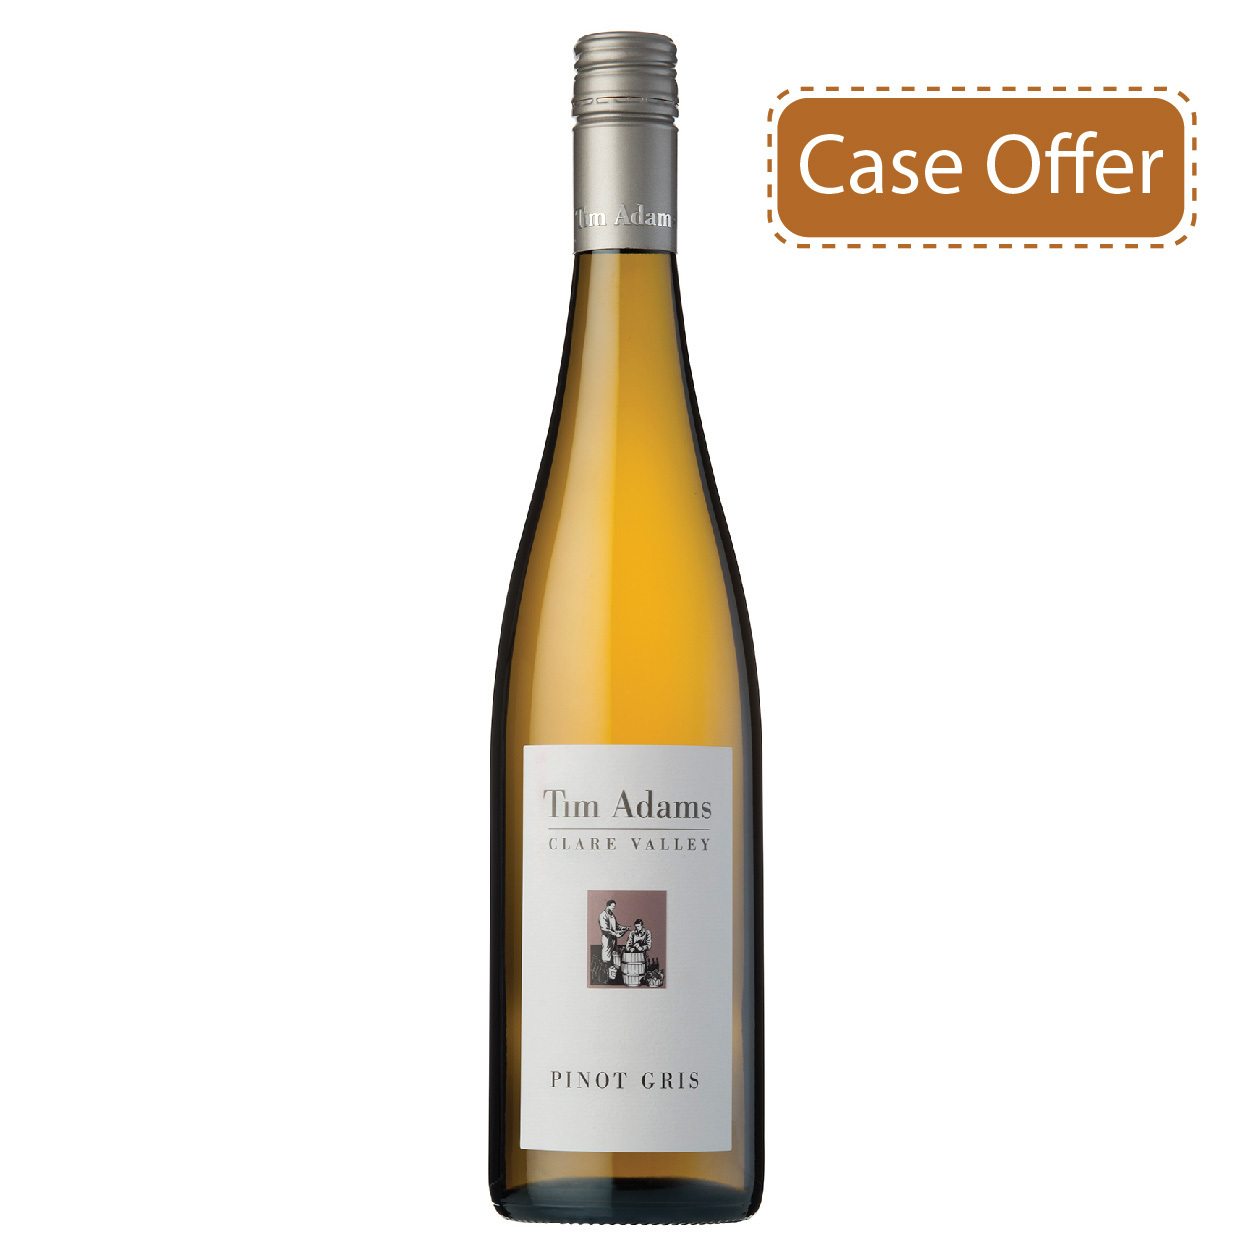 White Wine - Tim Adams Pinot Gris, 2017 Case Offer - AUS*